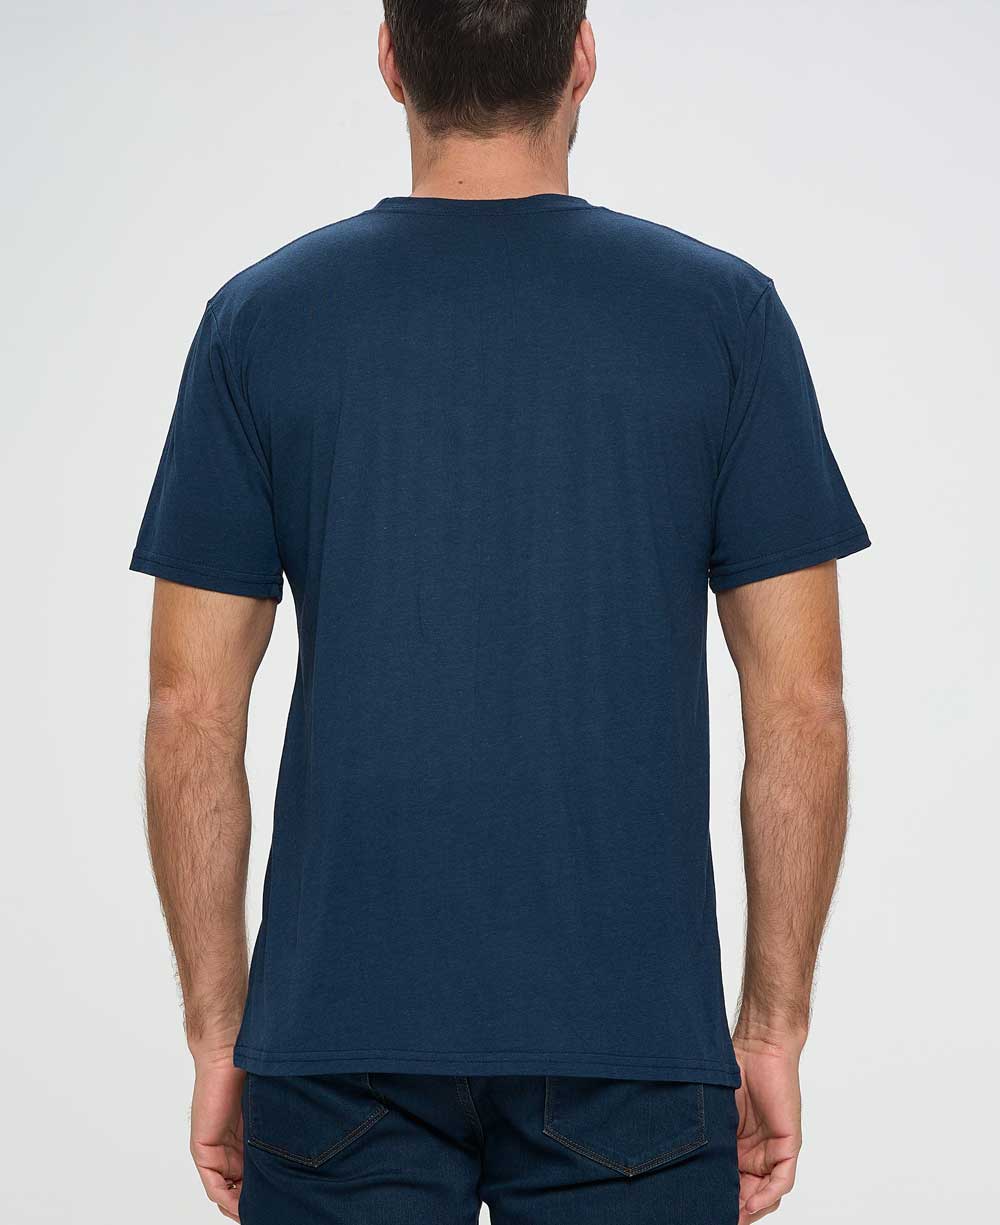 Men’s Om Bamboo Organic Cotton T-Shirt, Made in USA